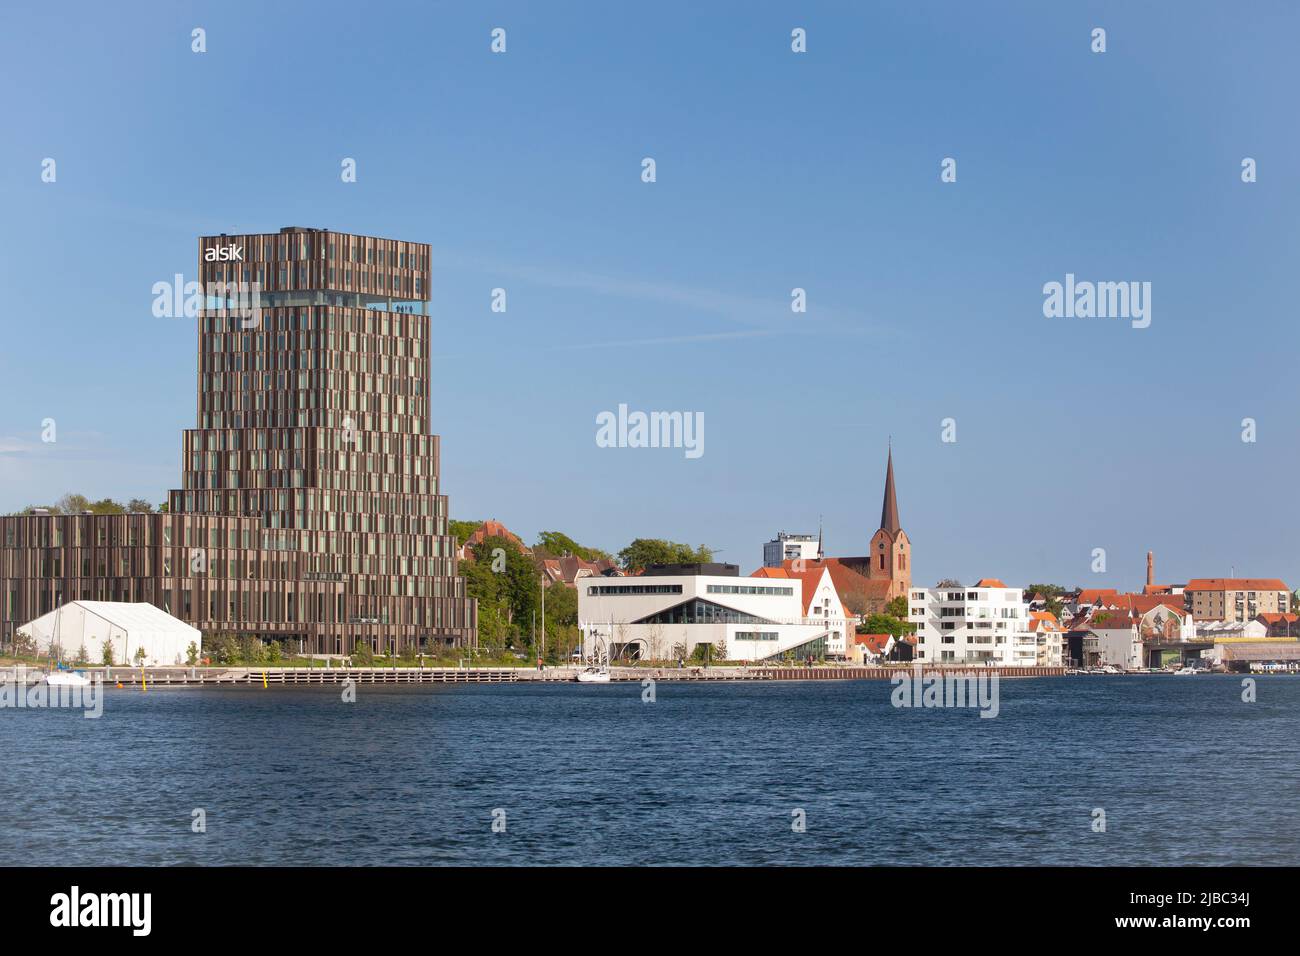 Waterfront at the port of Sonderborg with Alsik Hotel, Sonderborg, Denmark, Europe Stock Photo